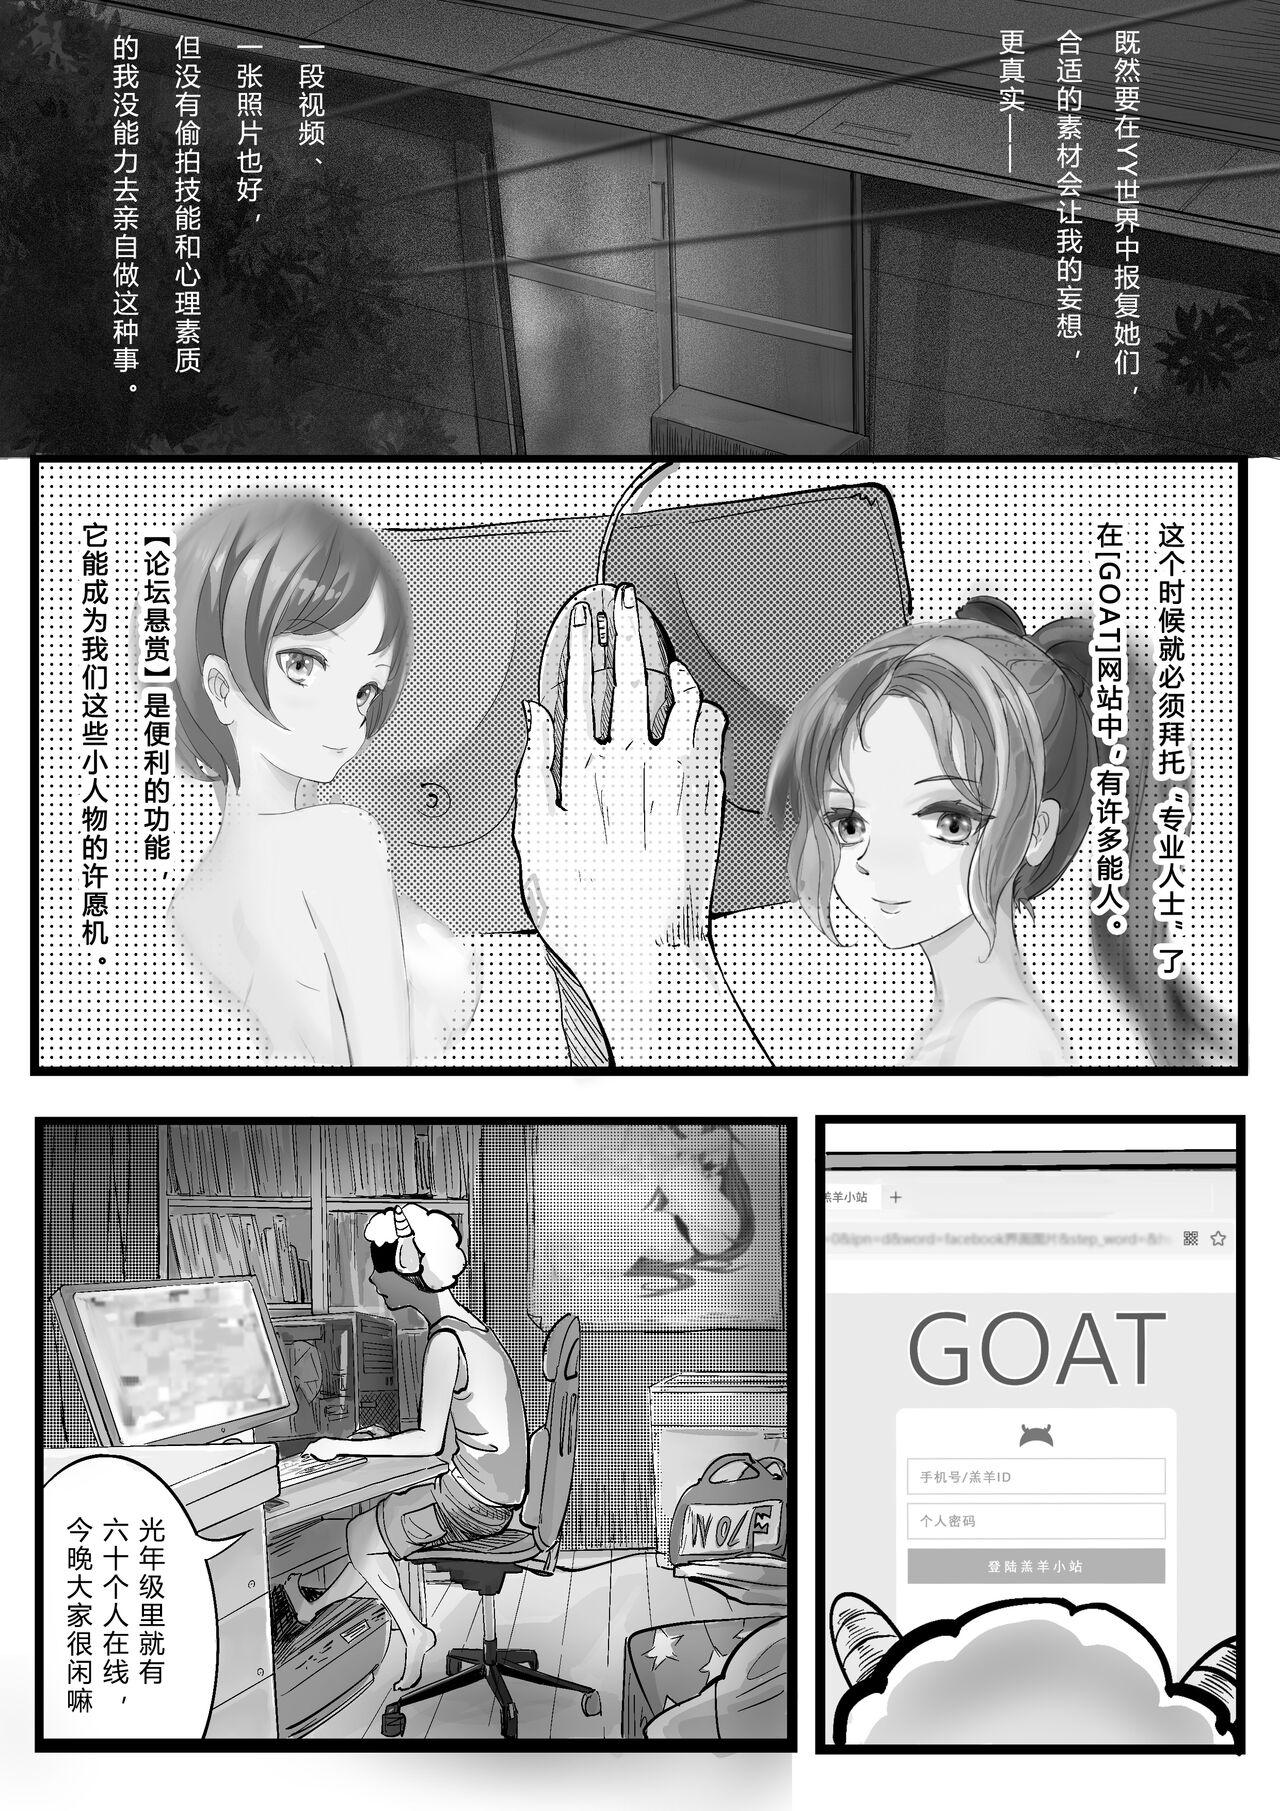 Big Dildo GOAT-goat chapter 2 - Original Screaming - Page 4